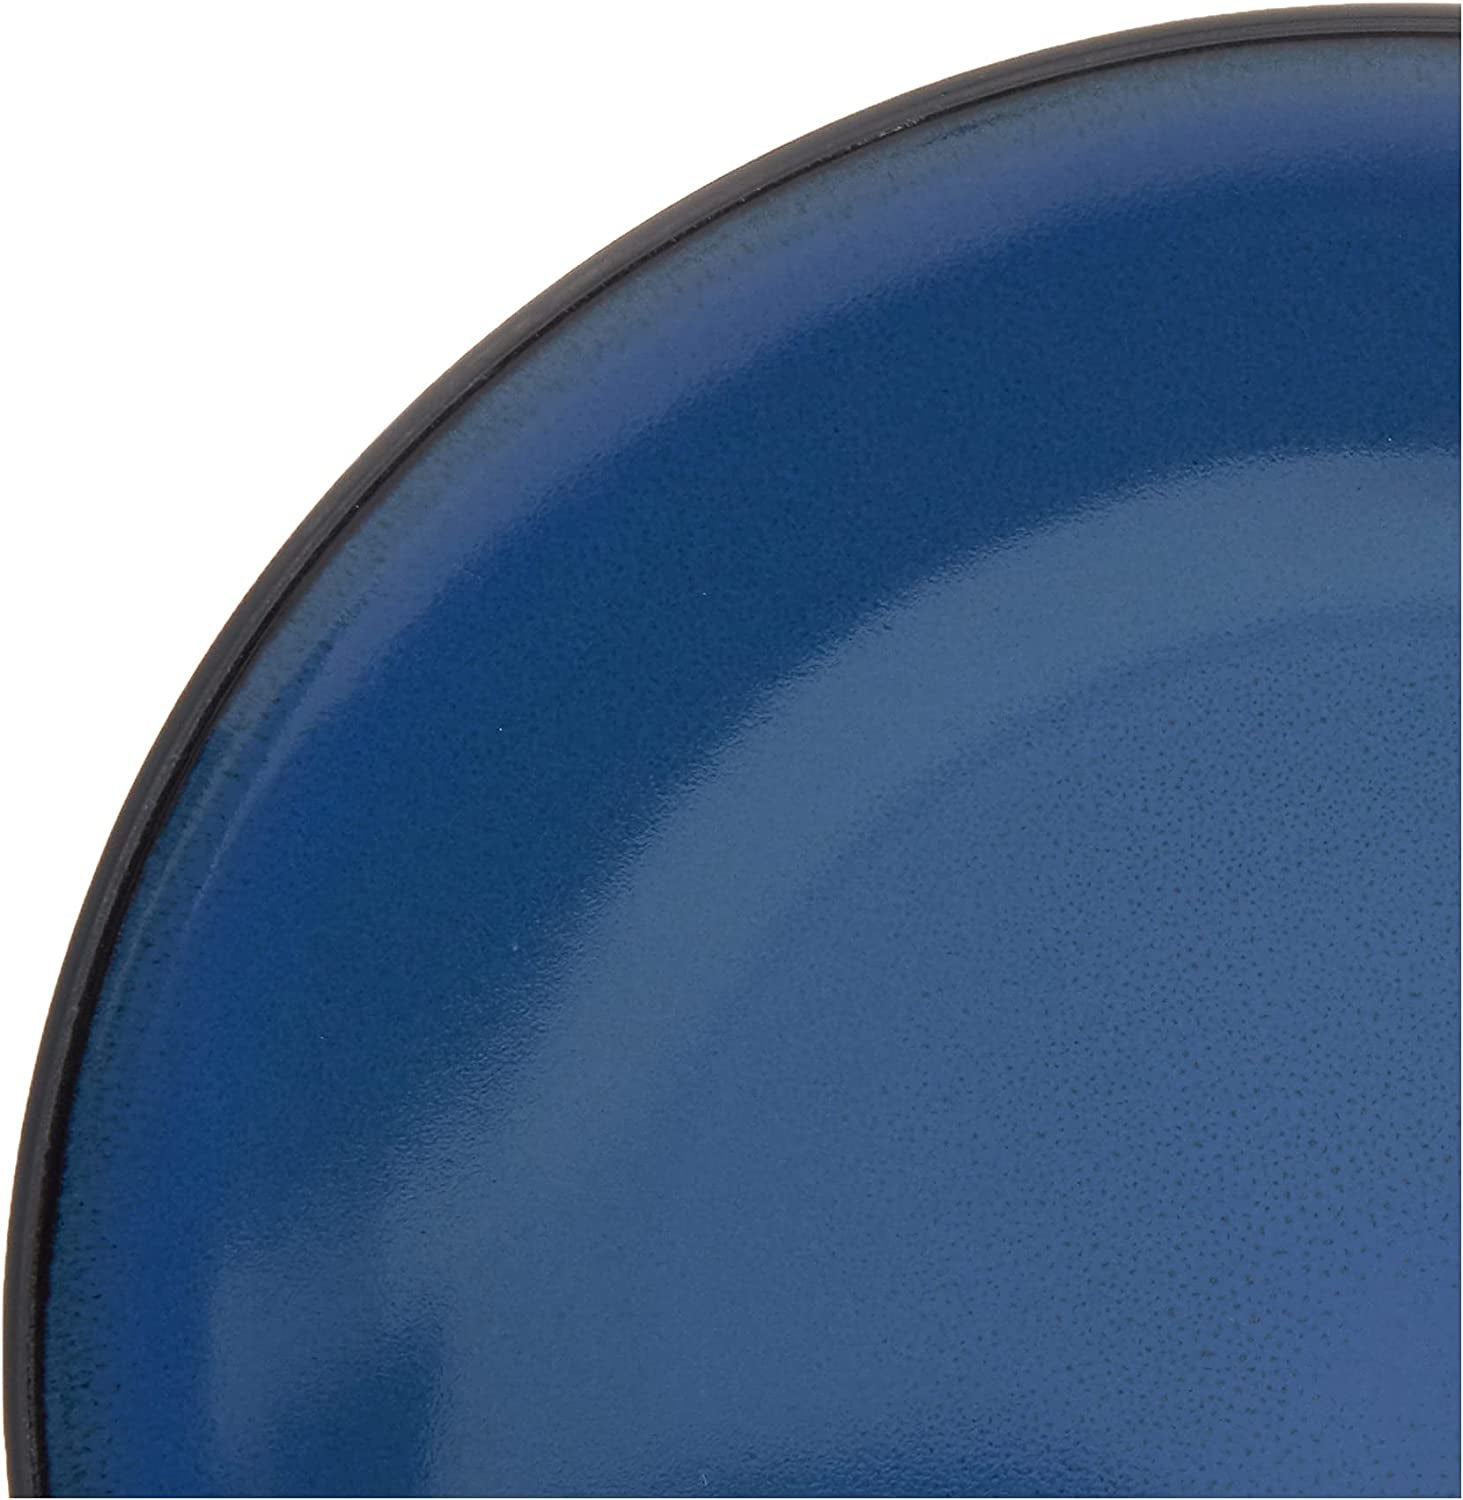 round Reactive Glaze Stoneware Dinnerware Set, Service for 4 (16Pc), Blue, Soho Round.